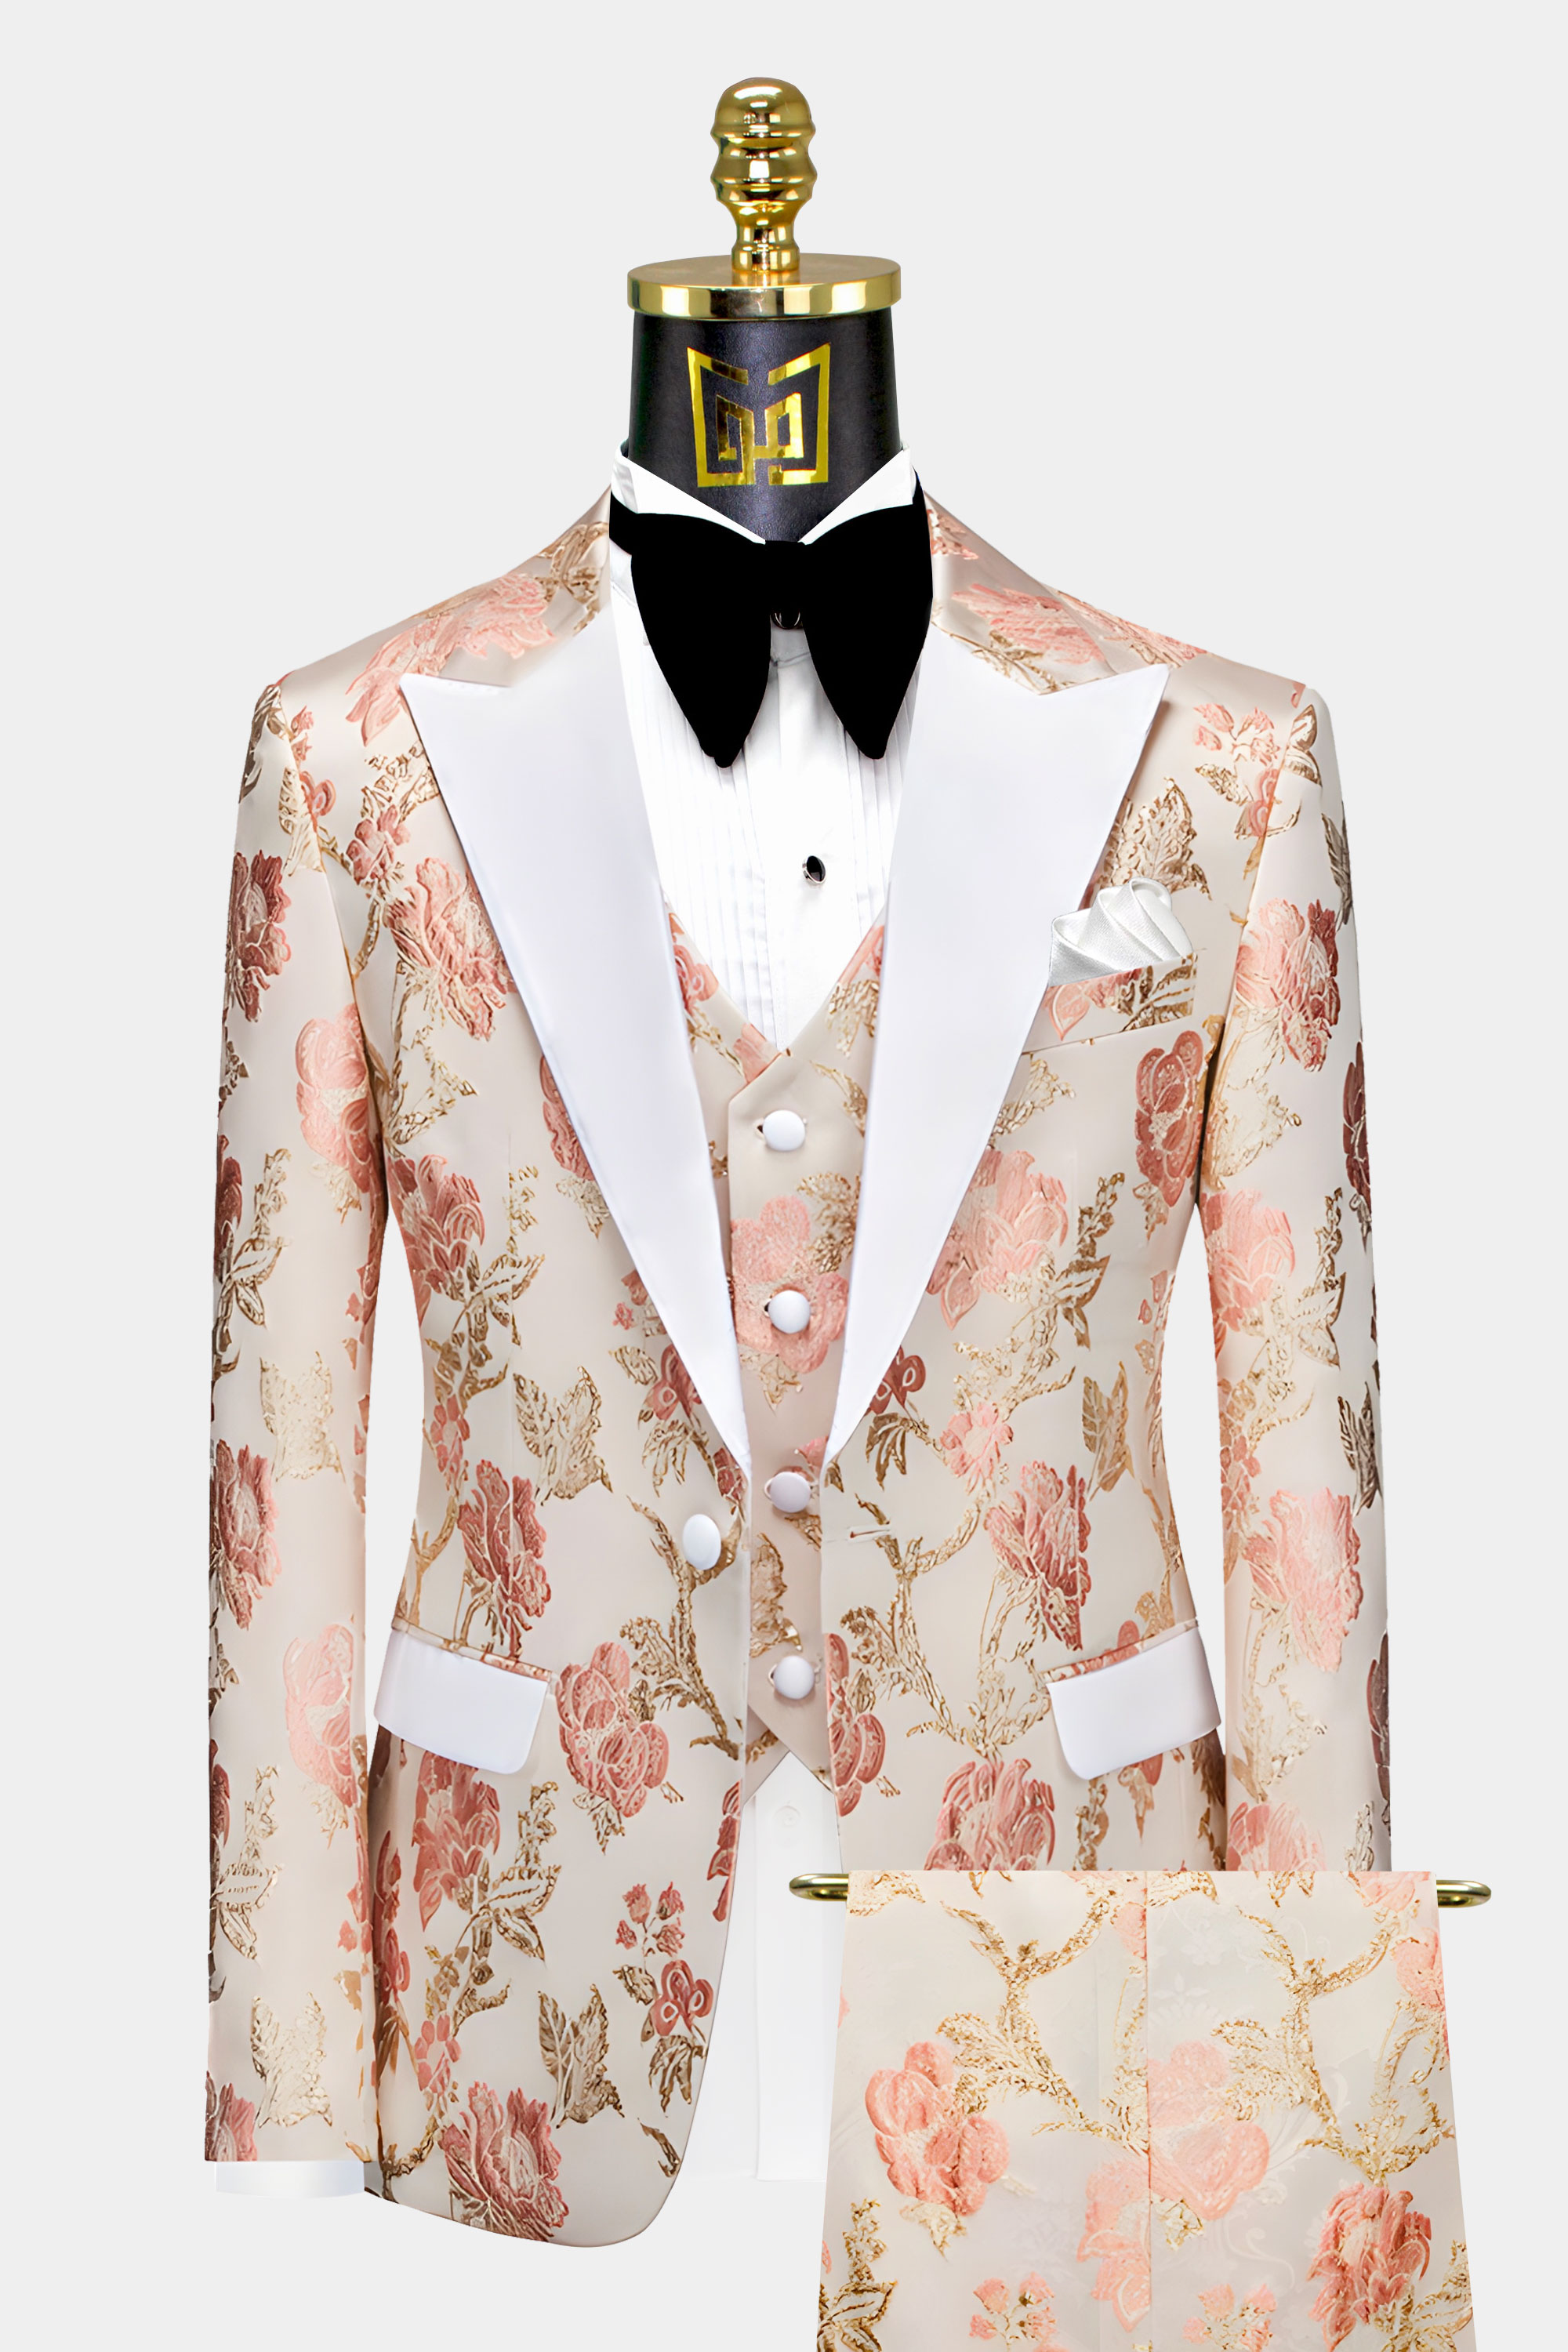 Rose-Gold-and-White-Tuxedo-Wedding-Groom-Prom-Suit-from-Gentlemansguru.com